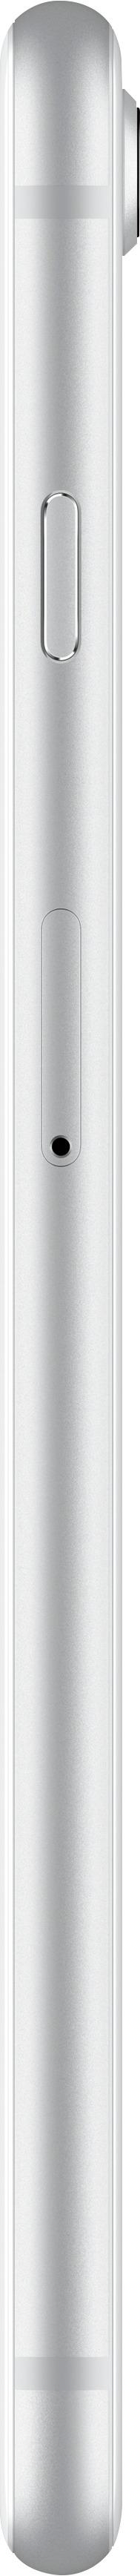 Apple iPhone 8 Plus 256GB Silver (Sprint) MQ8H2LL/A - Best Buy